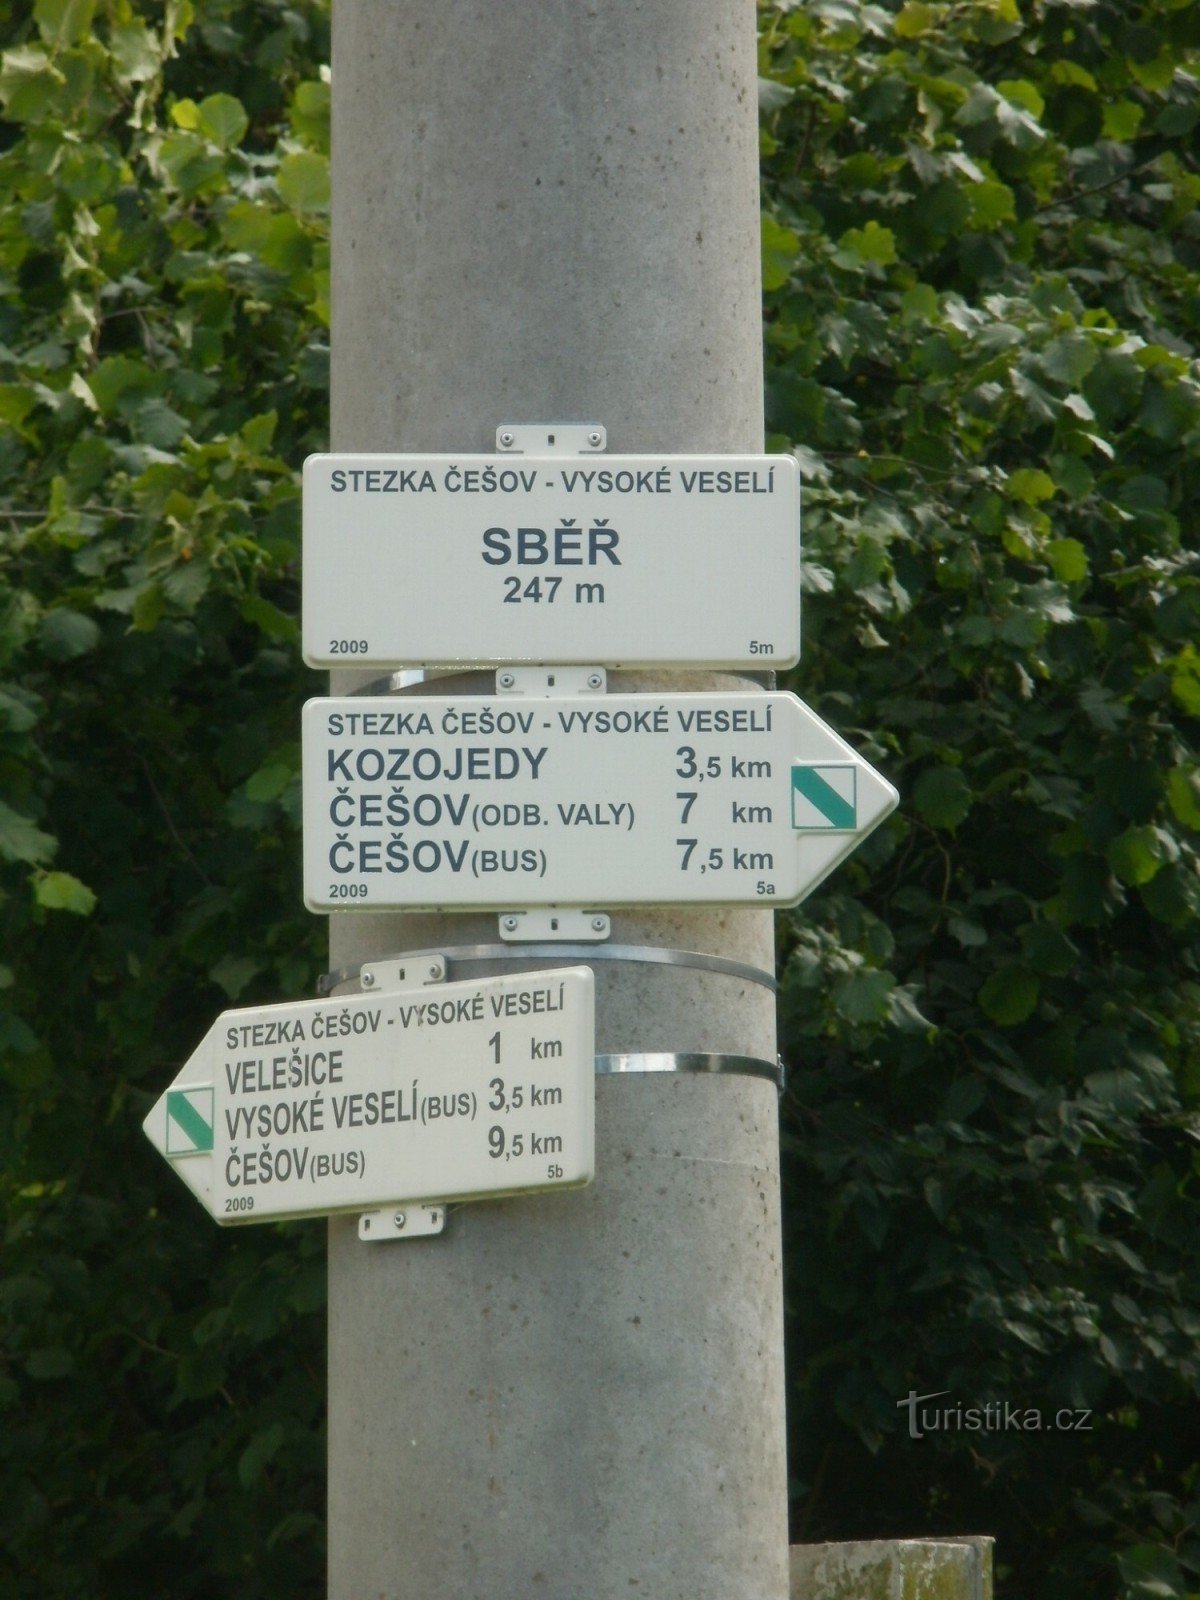 cruzamento de NS Češov-Vysoké Veselí - Sběř